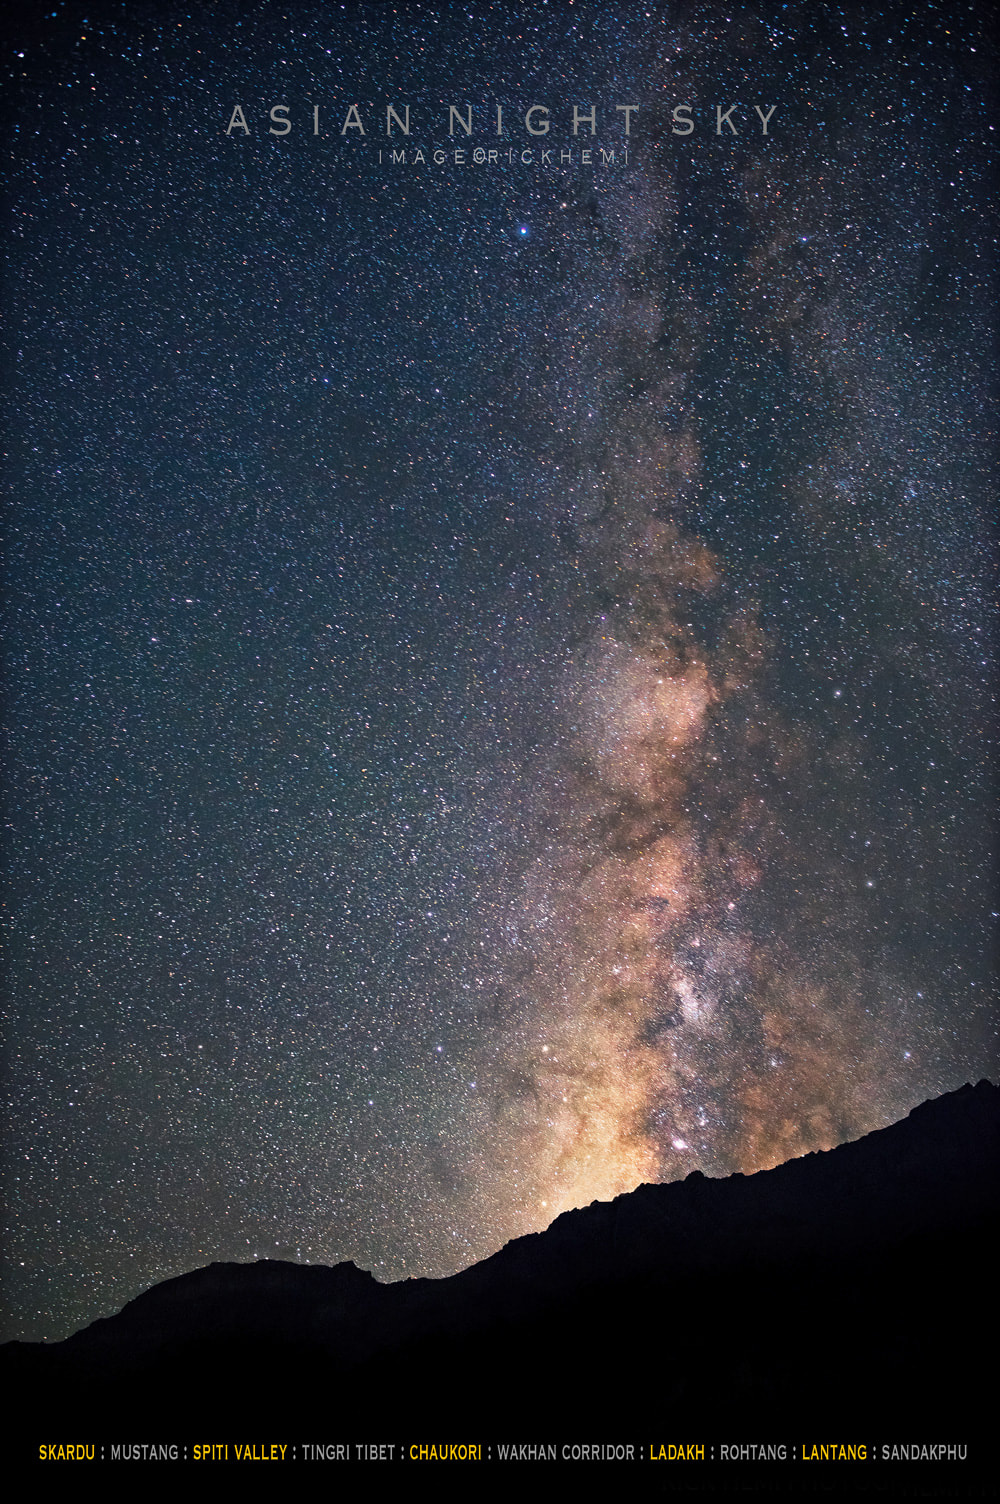 overland travel night sky image by rick hemi